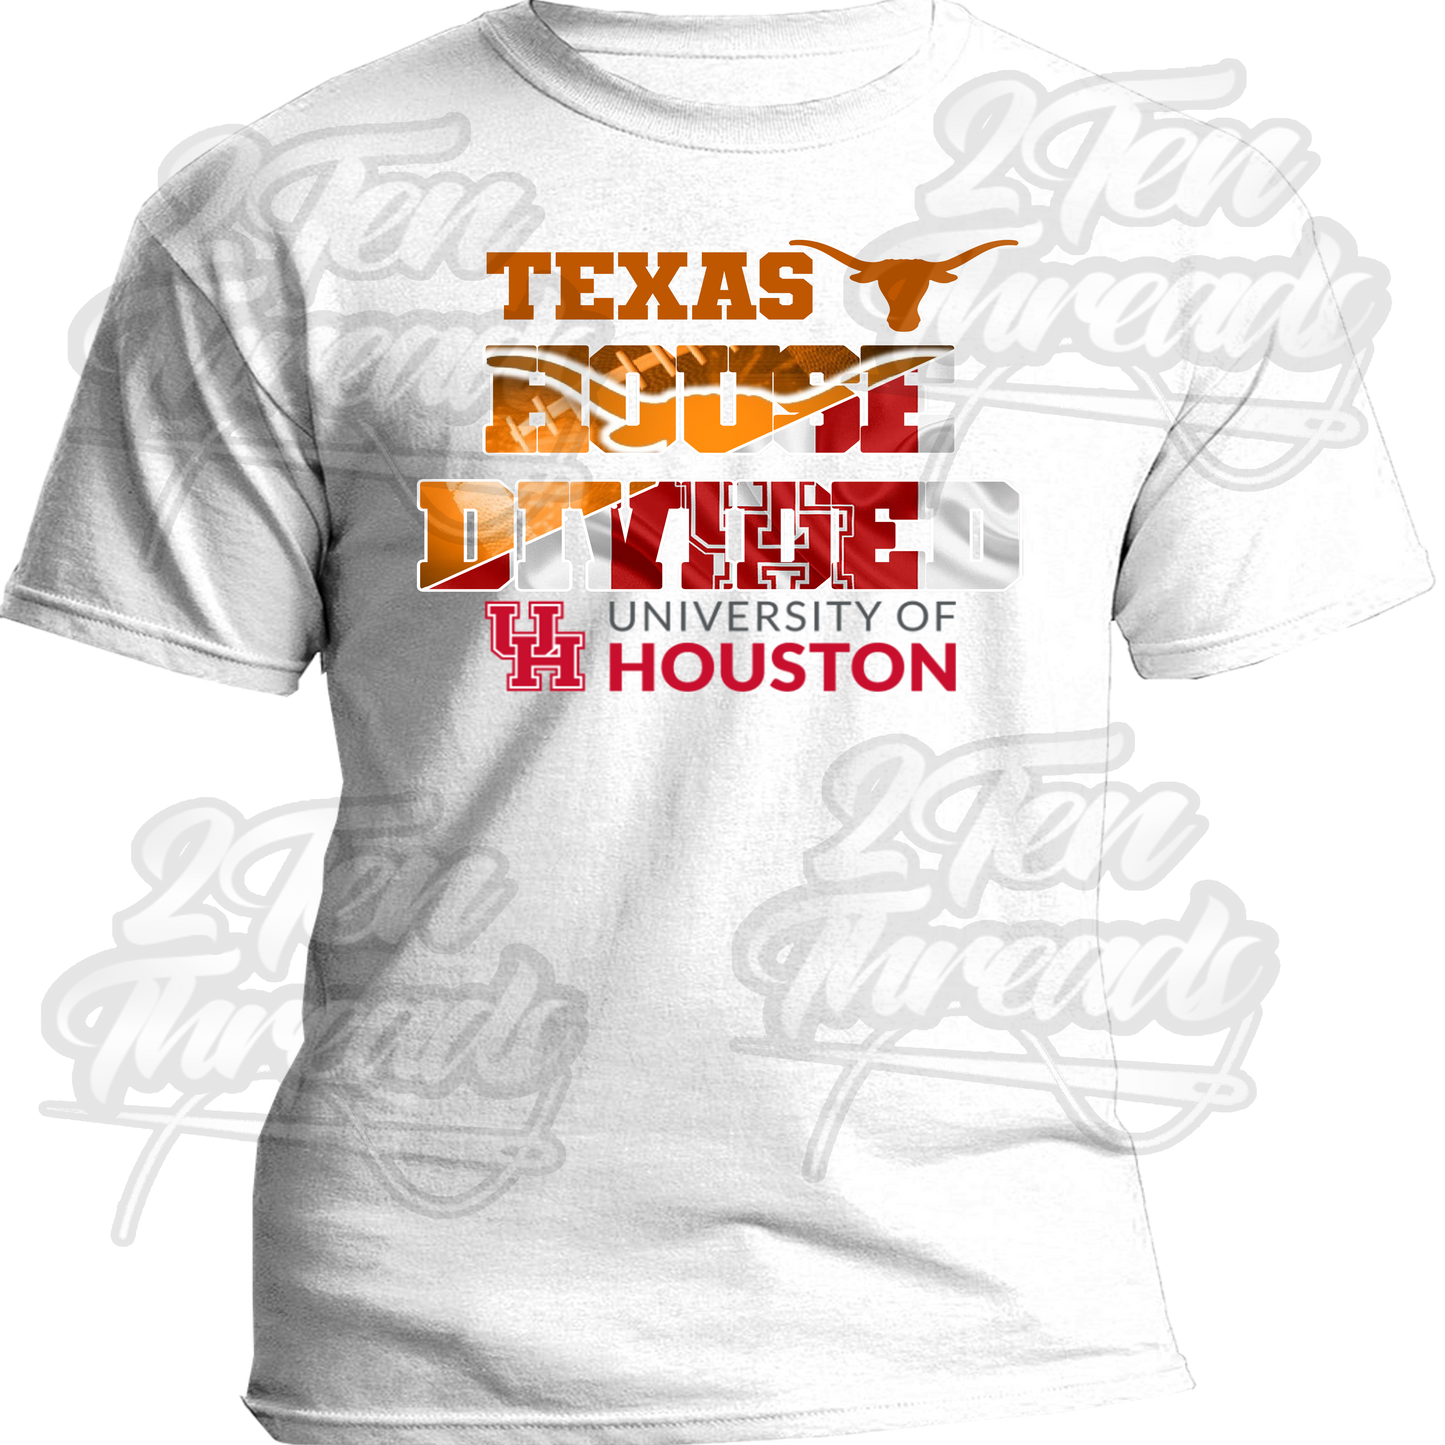 Texas / Houston House divided shirt